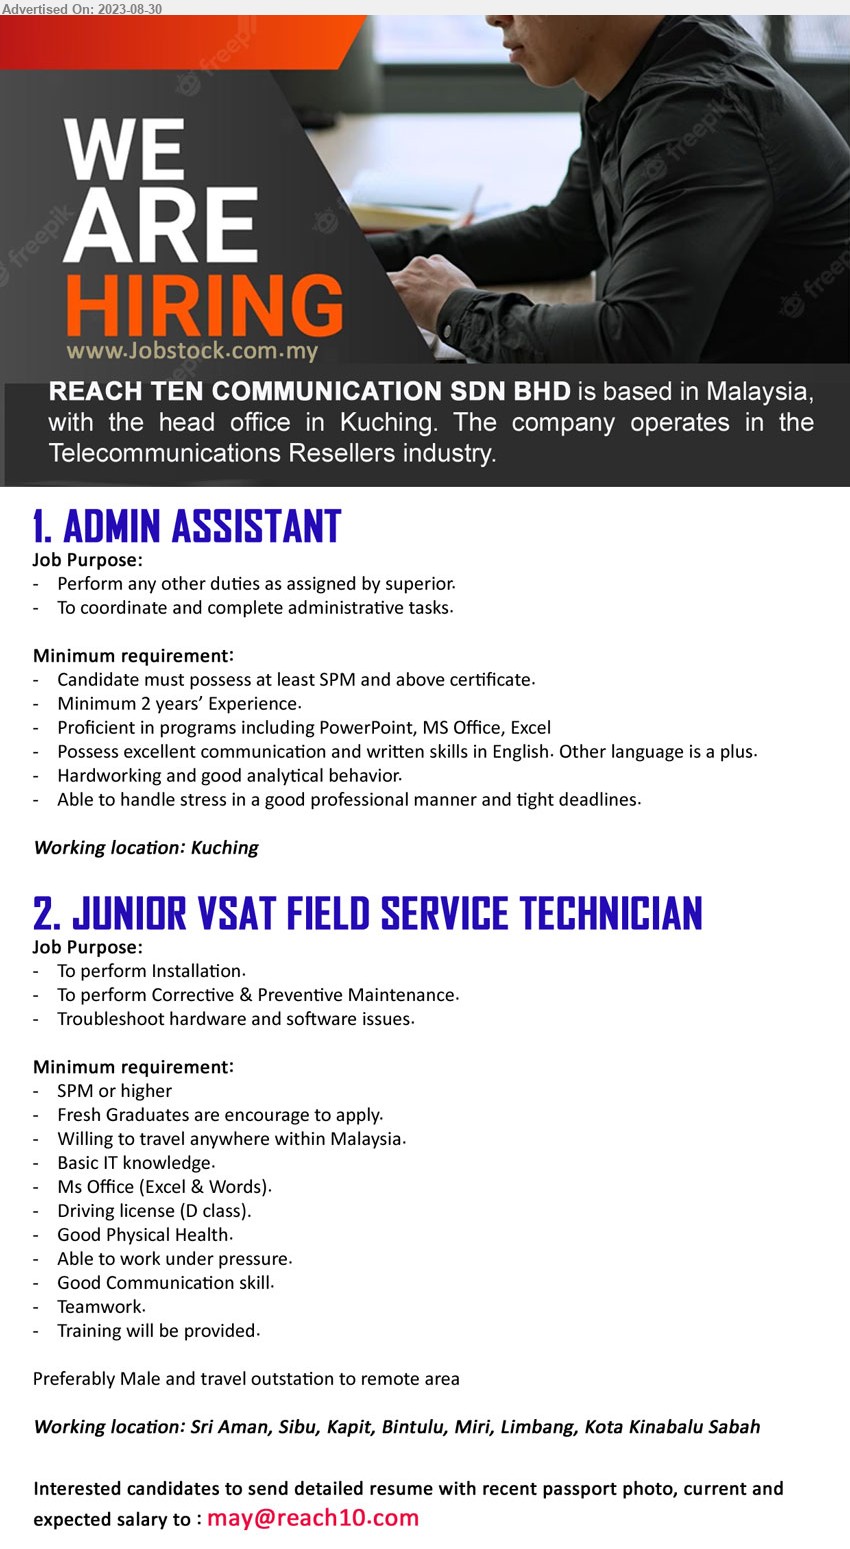 REACH 10 COMMUNICATION SDN BHD - 1. ADMIN ASSISTANT (Kuching), SPM, 2 yrs. exp., Proficient in programs including PowerPoint, MS Office, Excel,...
2. JUNIOR VSAT FIELD SERVICE TECHNICIAN (Sri Aman, Sibu, Kapit, Bintulu, Miri, Limbang, KK), SPM, Basic IT knowledge, Ms Office (Excel & Words),...
Email resume to ...